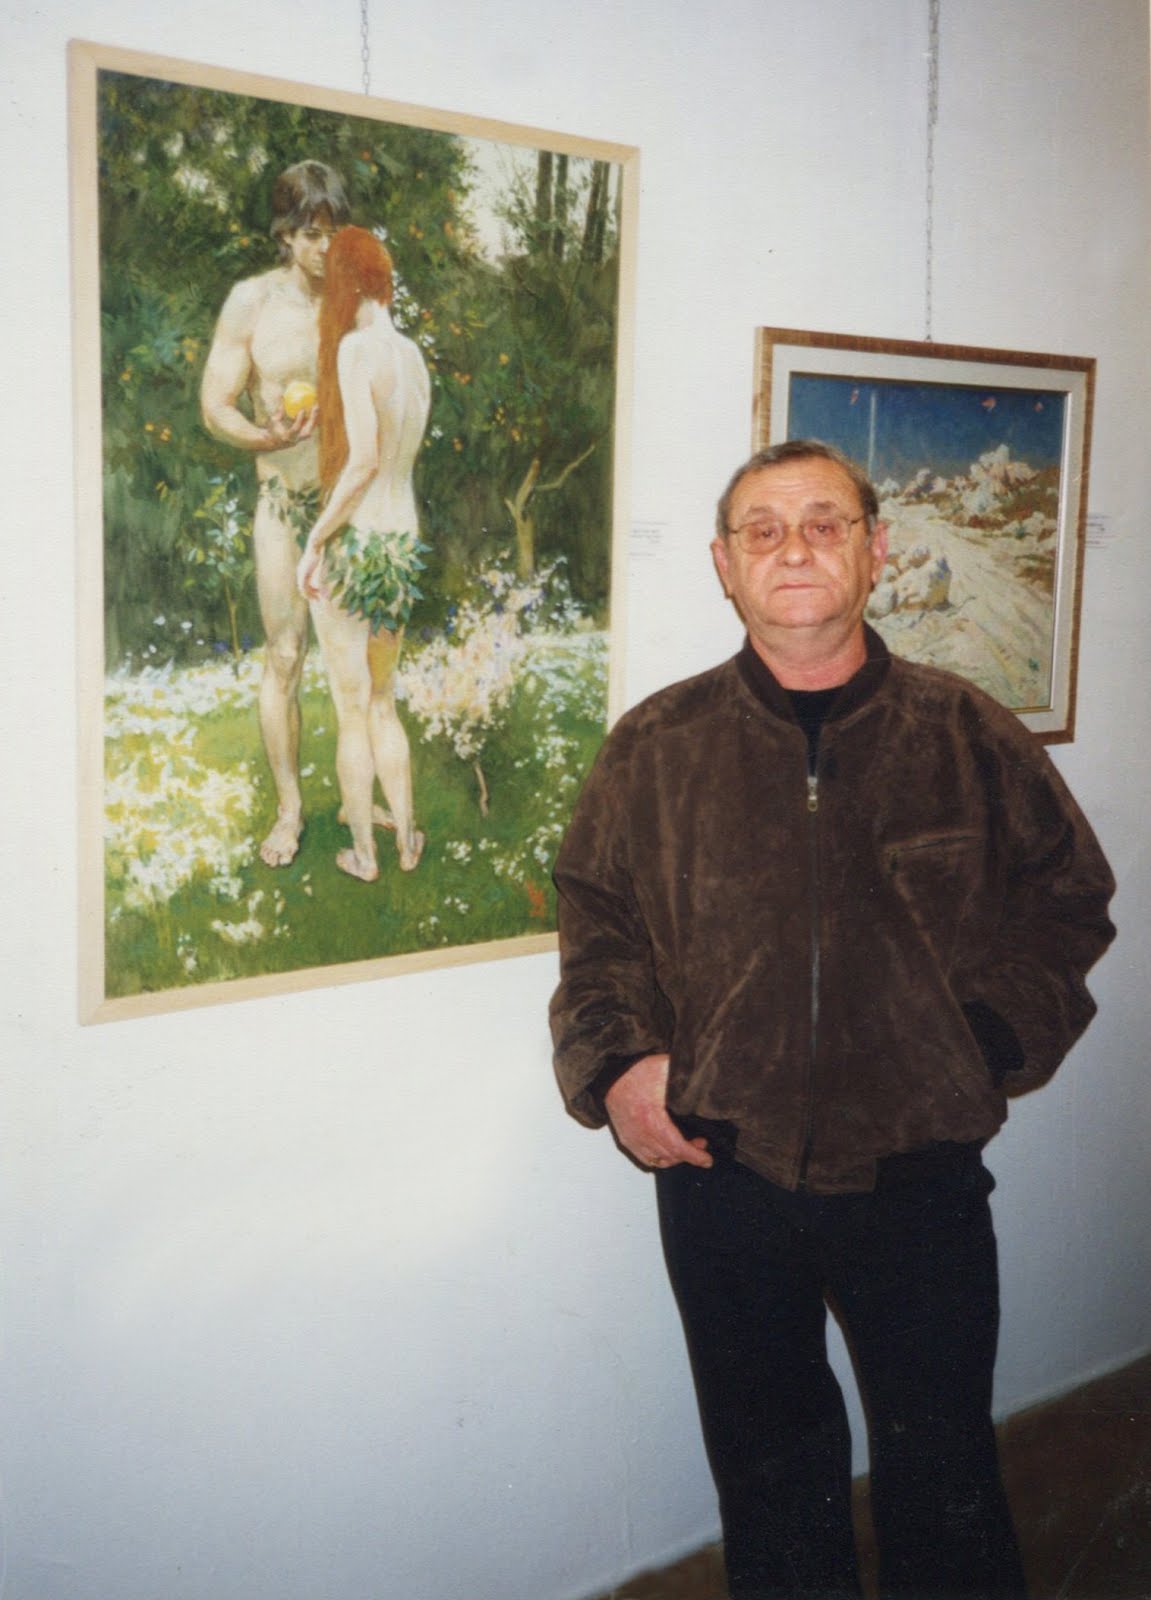 Mark Vcherushanski at one of the exhibitions